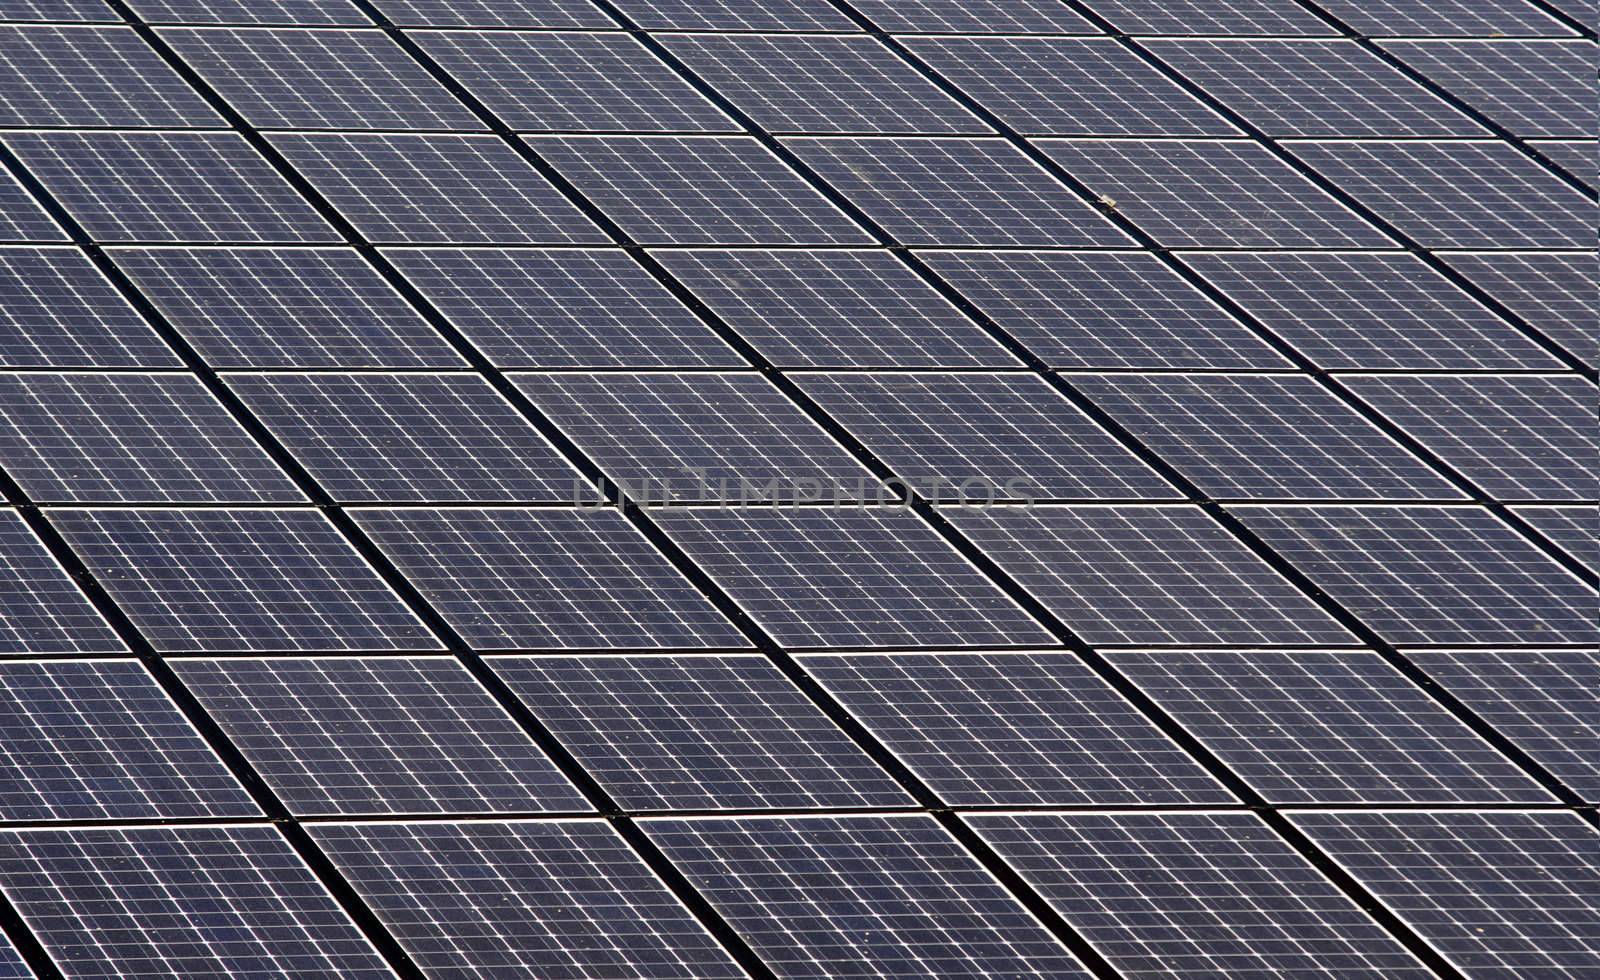 solar panels by gufoto